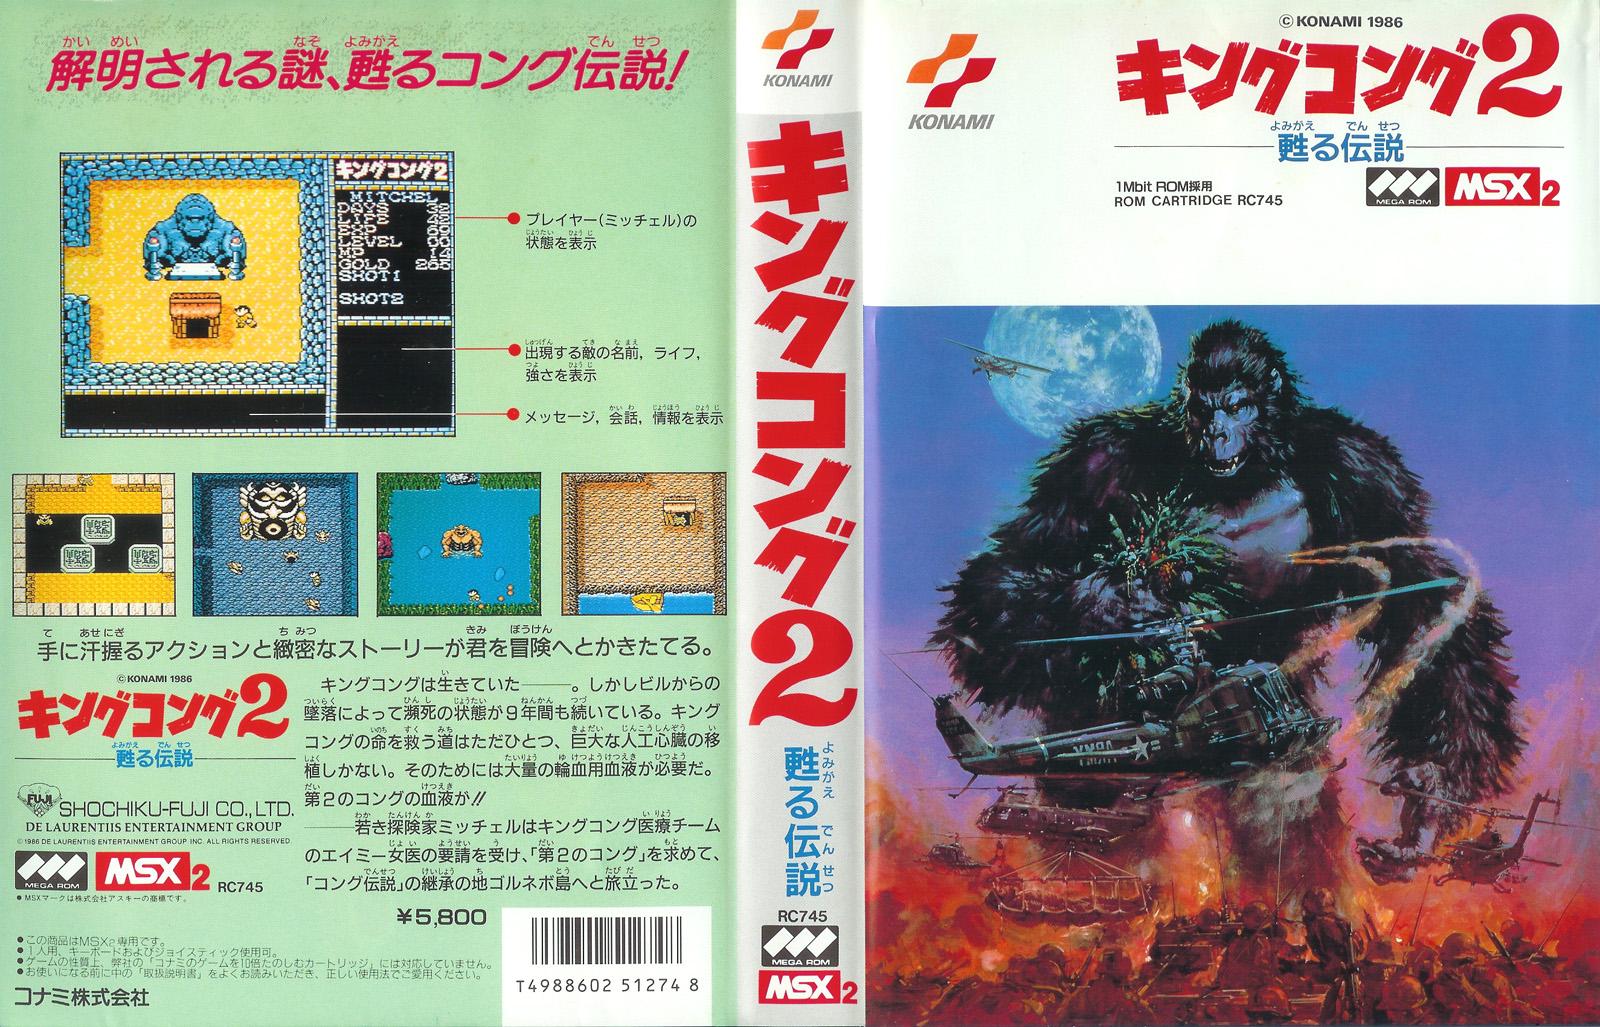 King Kong 2 (1986, MSX2, Konami) | Releases | Generation MSX